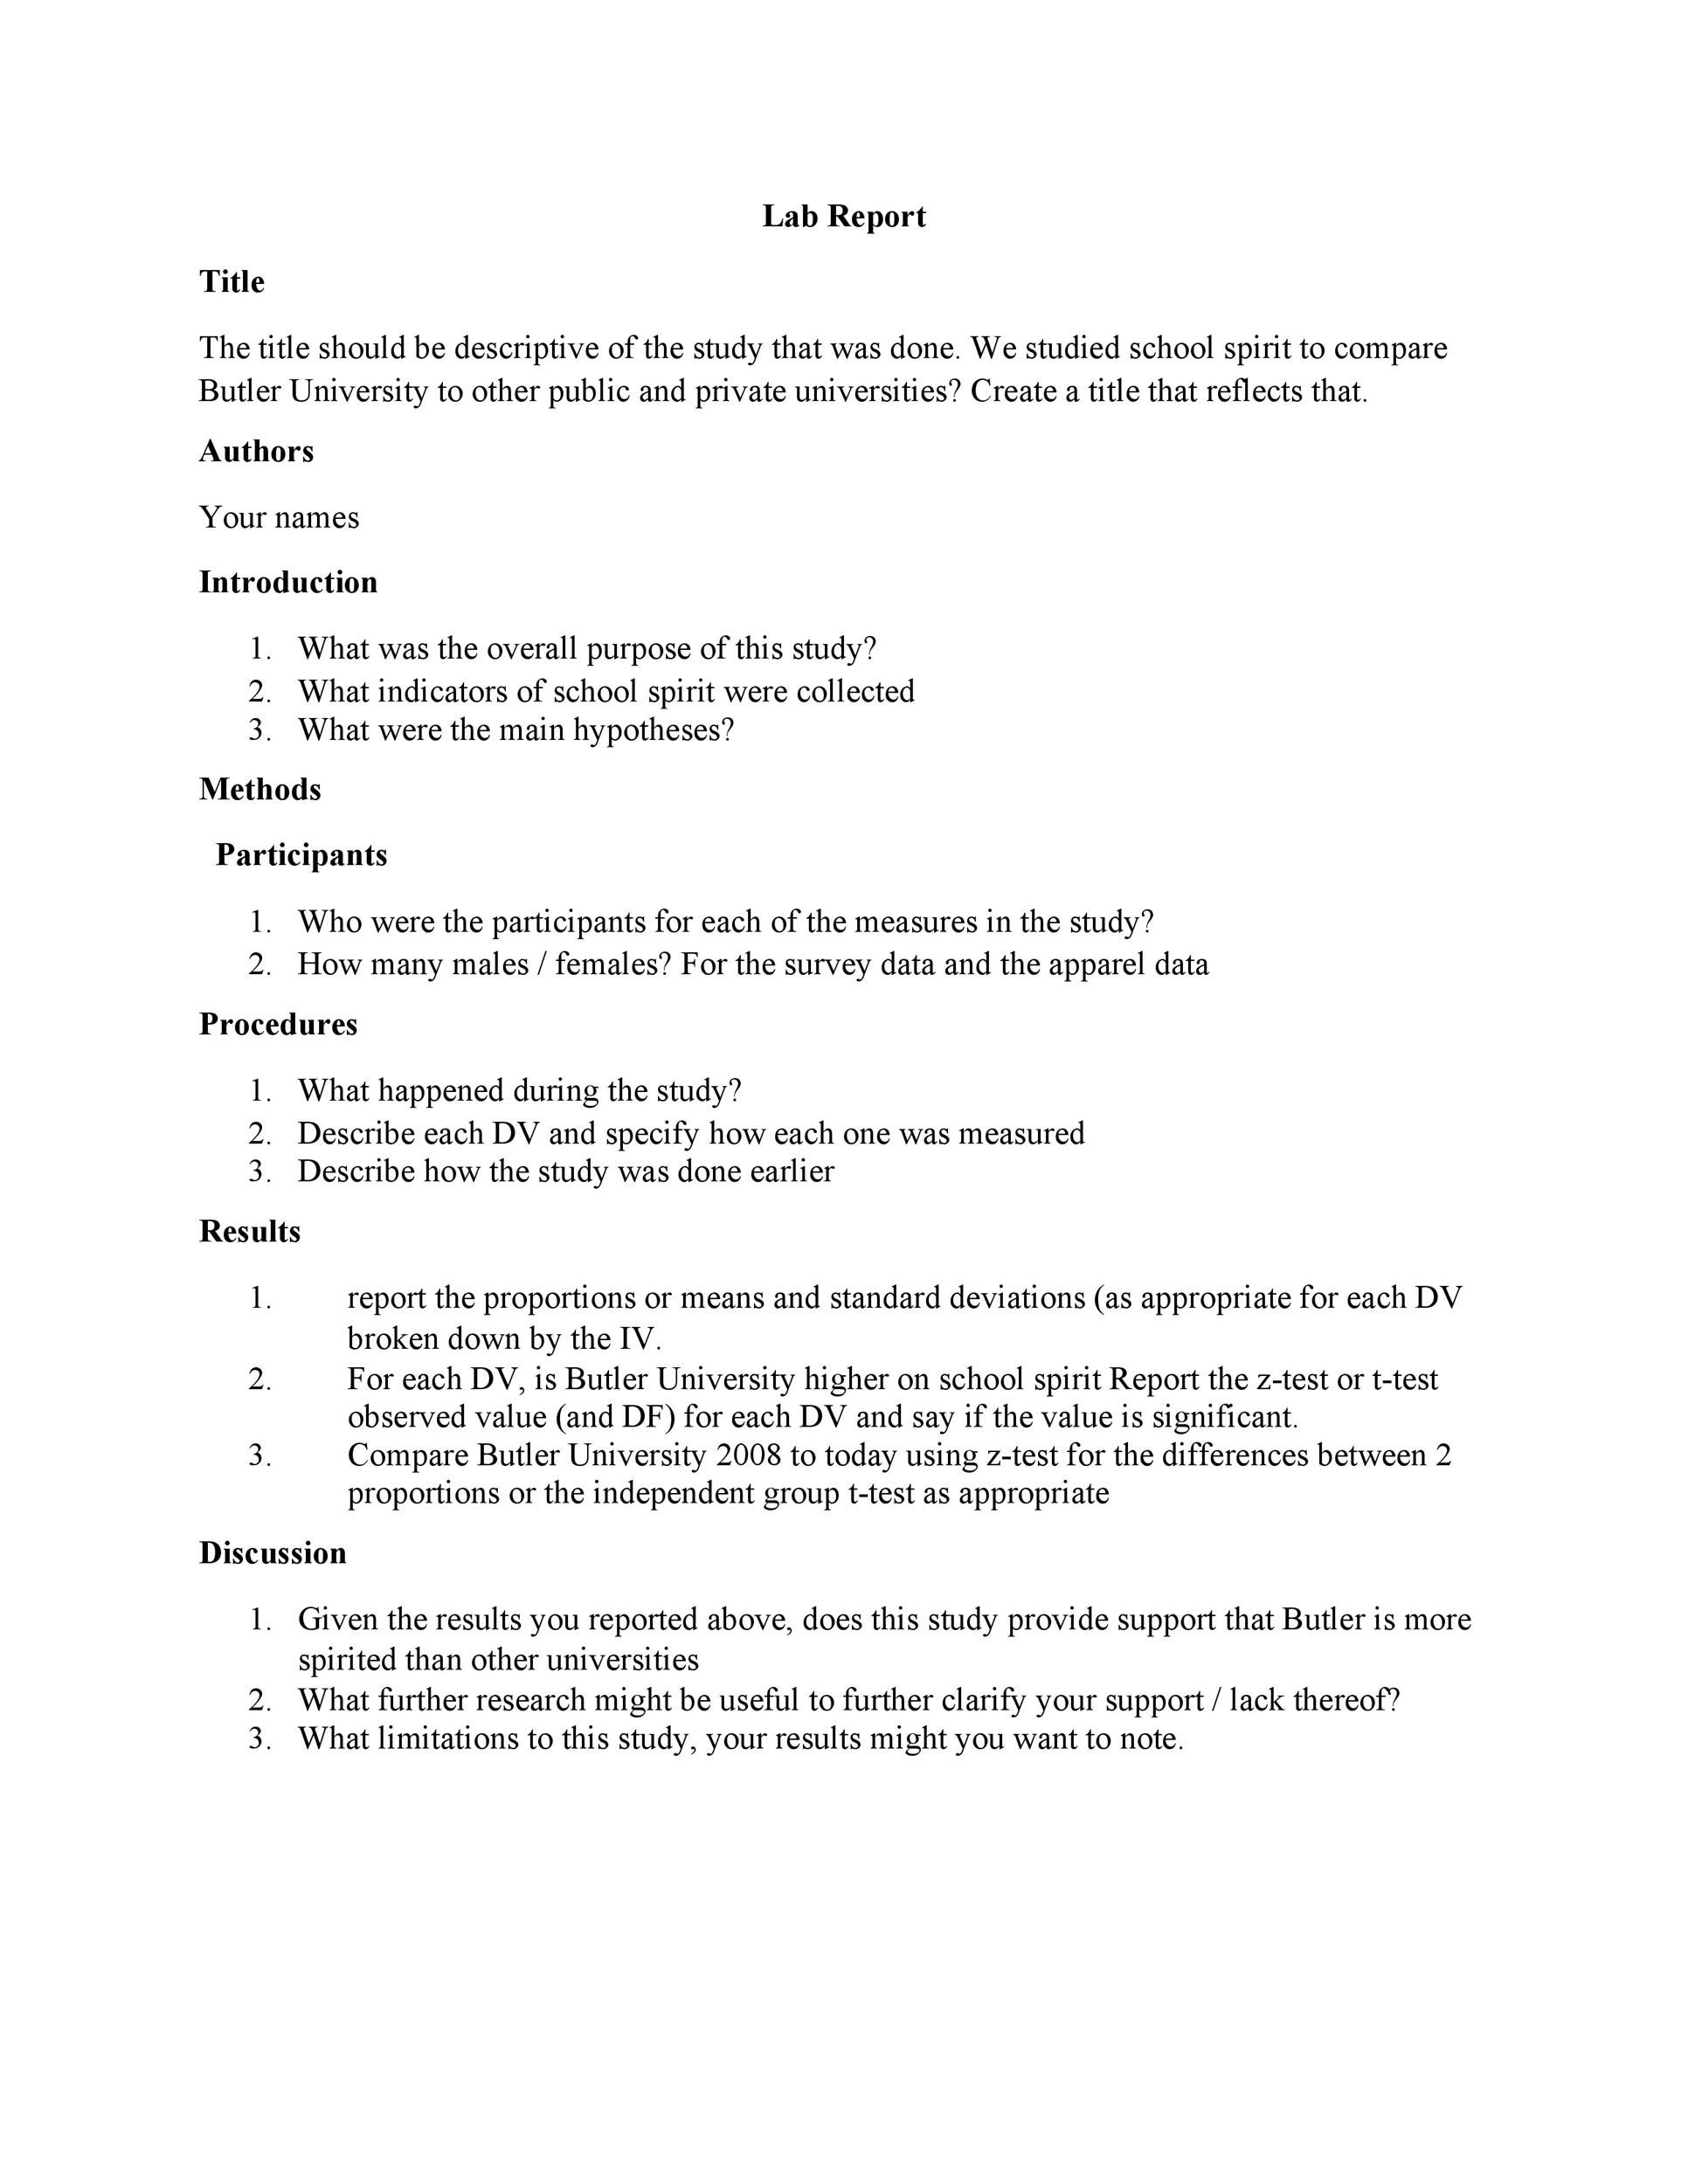 report lab pdf example